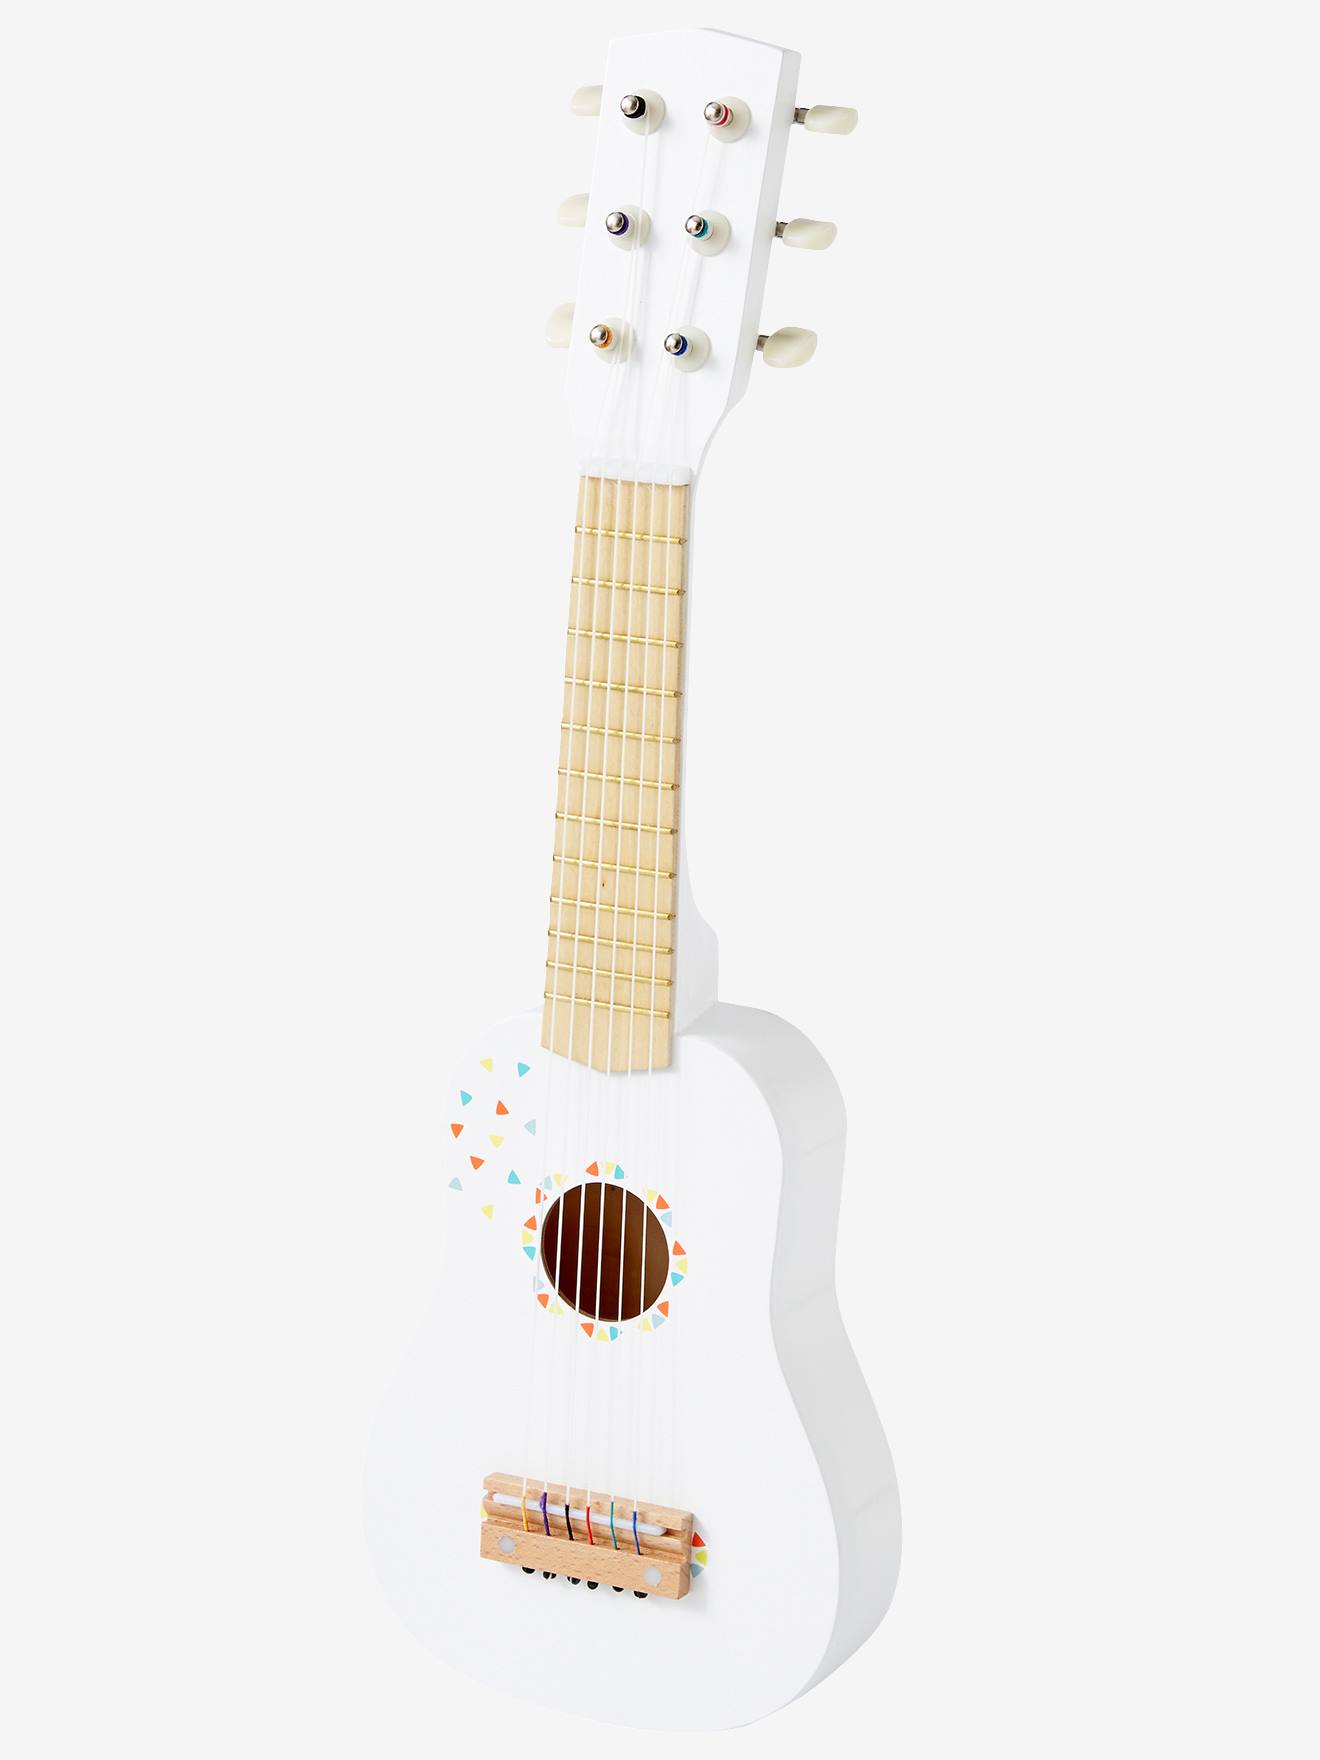 guitare en bois jouet